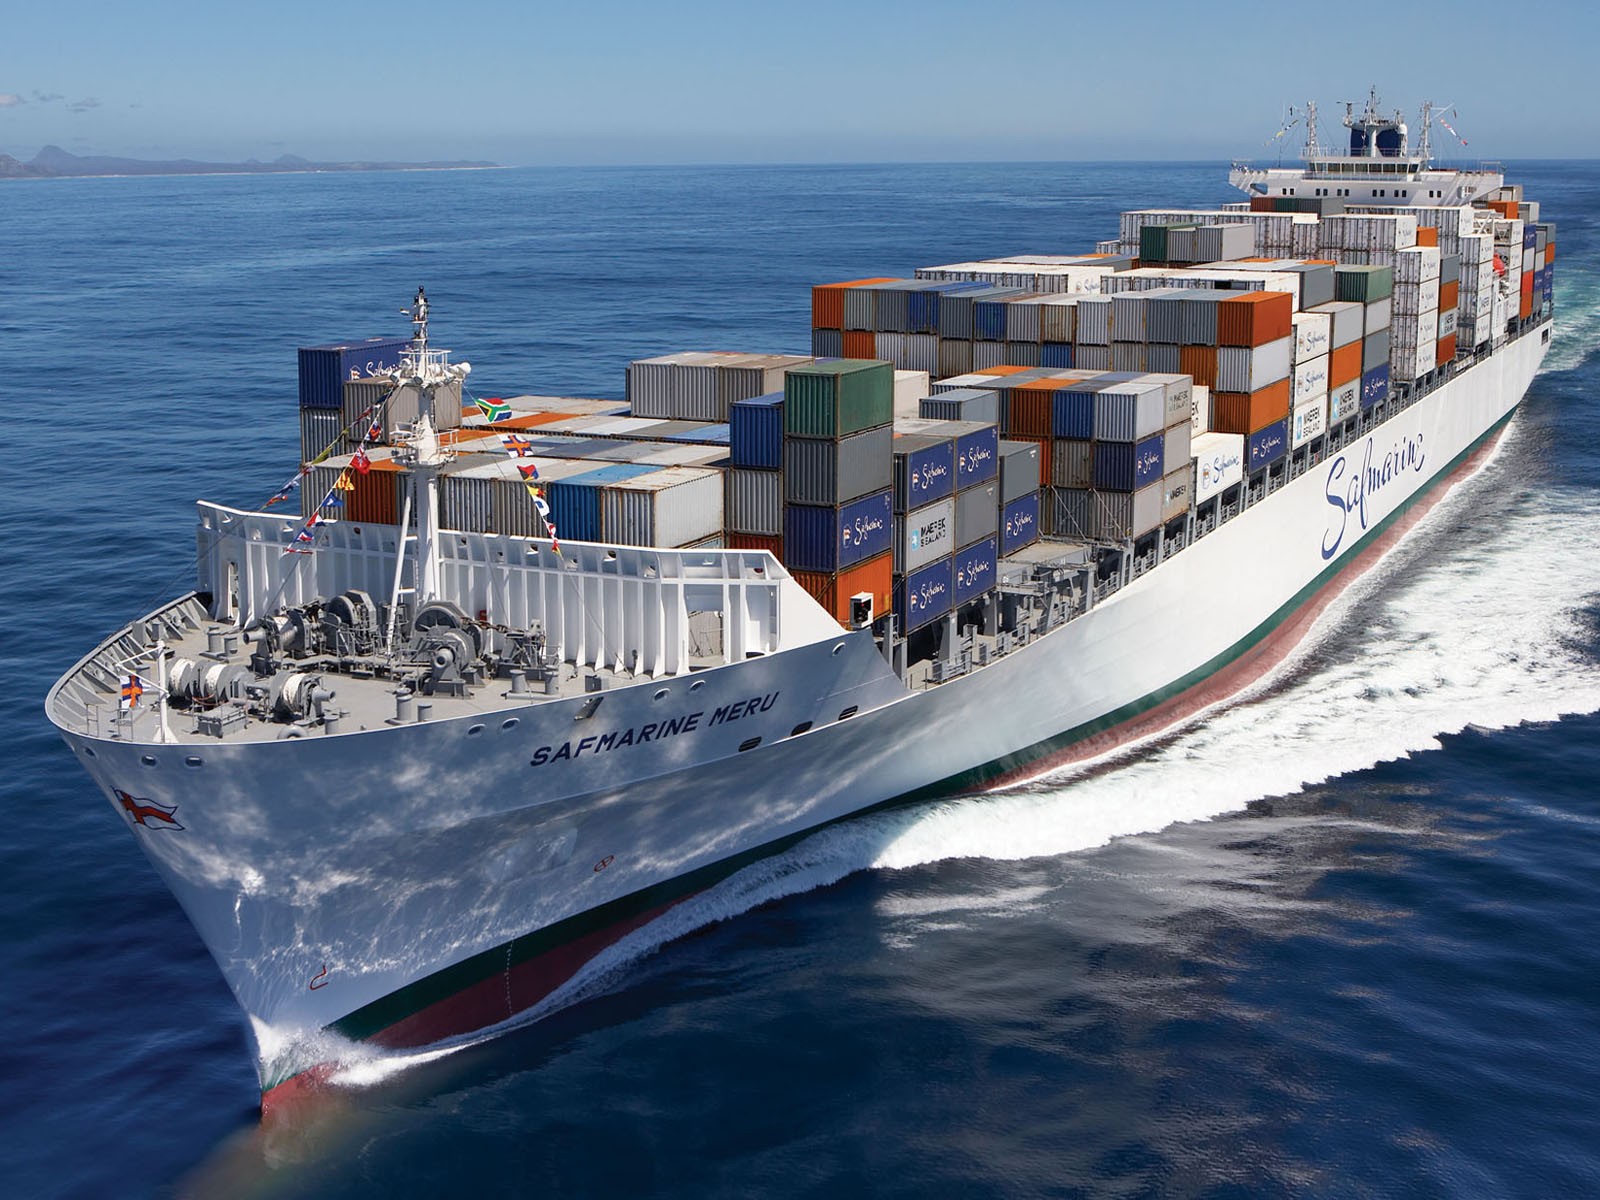 wallpaper ship sea,vehicle,water transportation,boat,ship,cargo ship